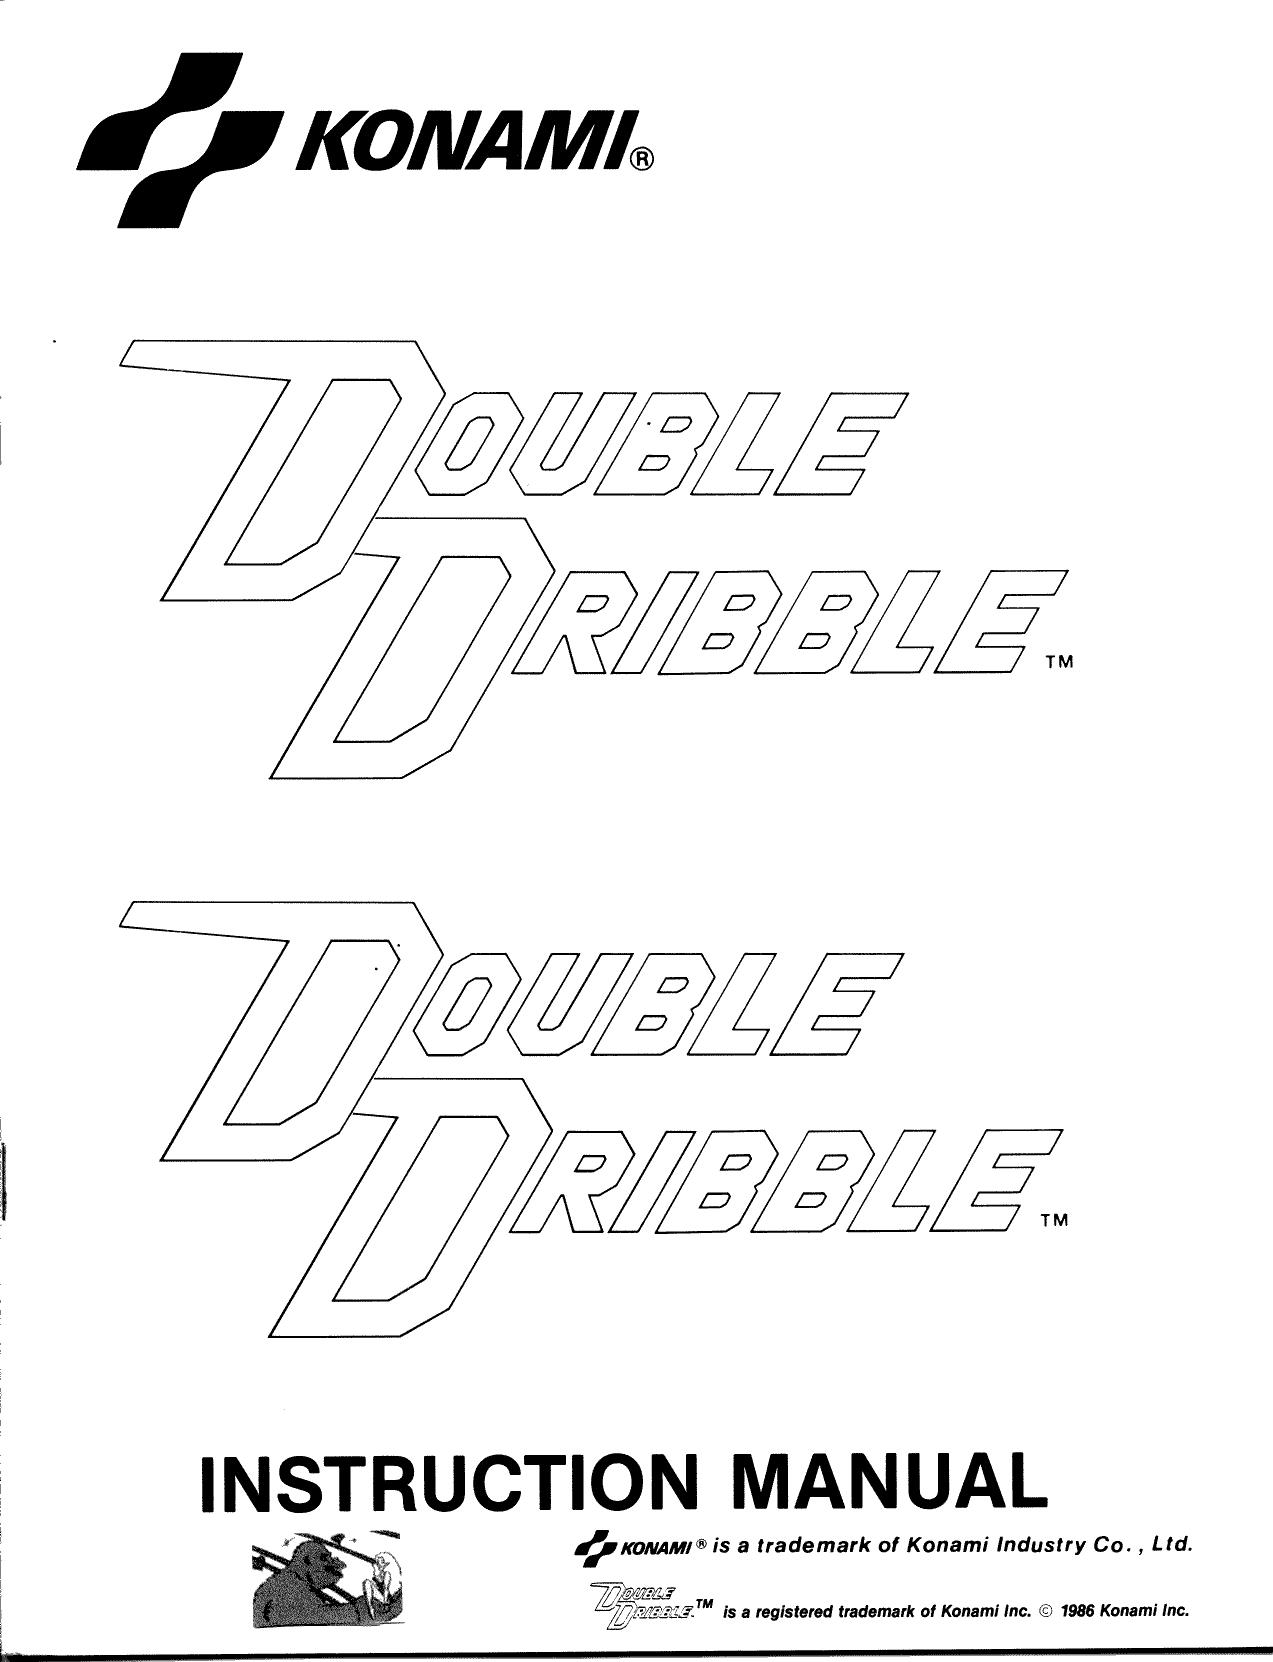 DoubleDribble Manual